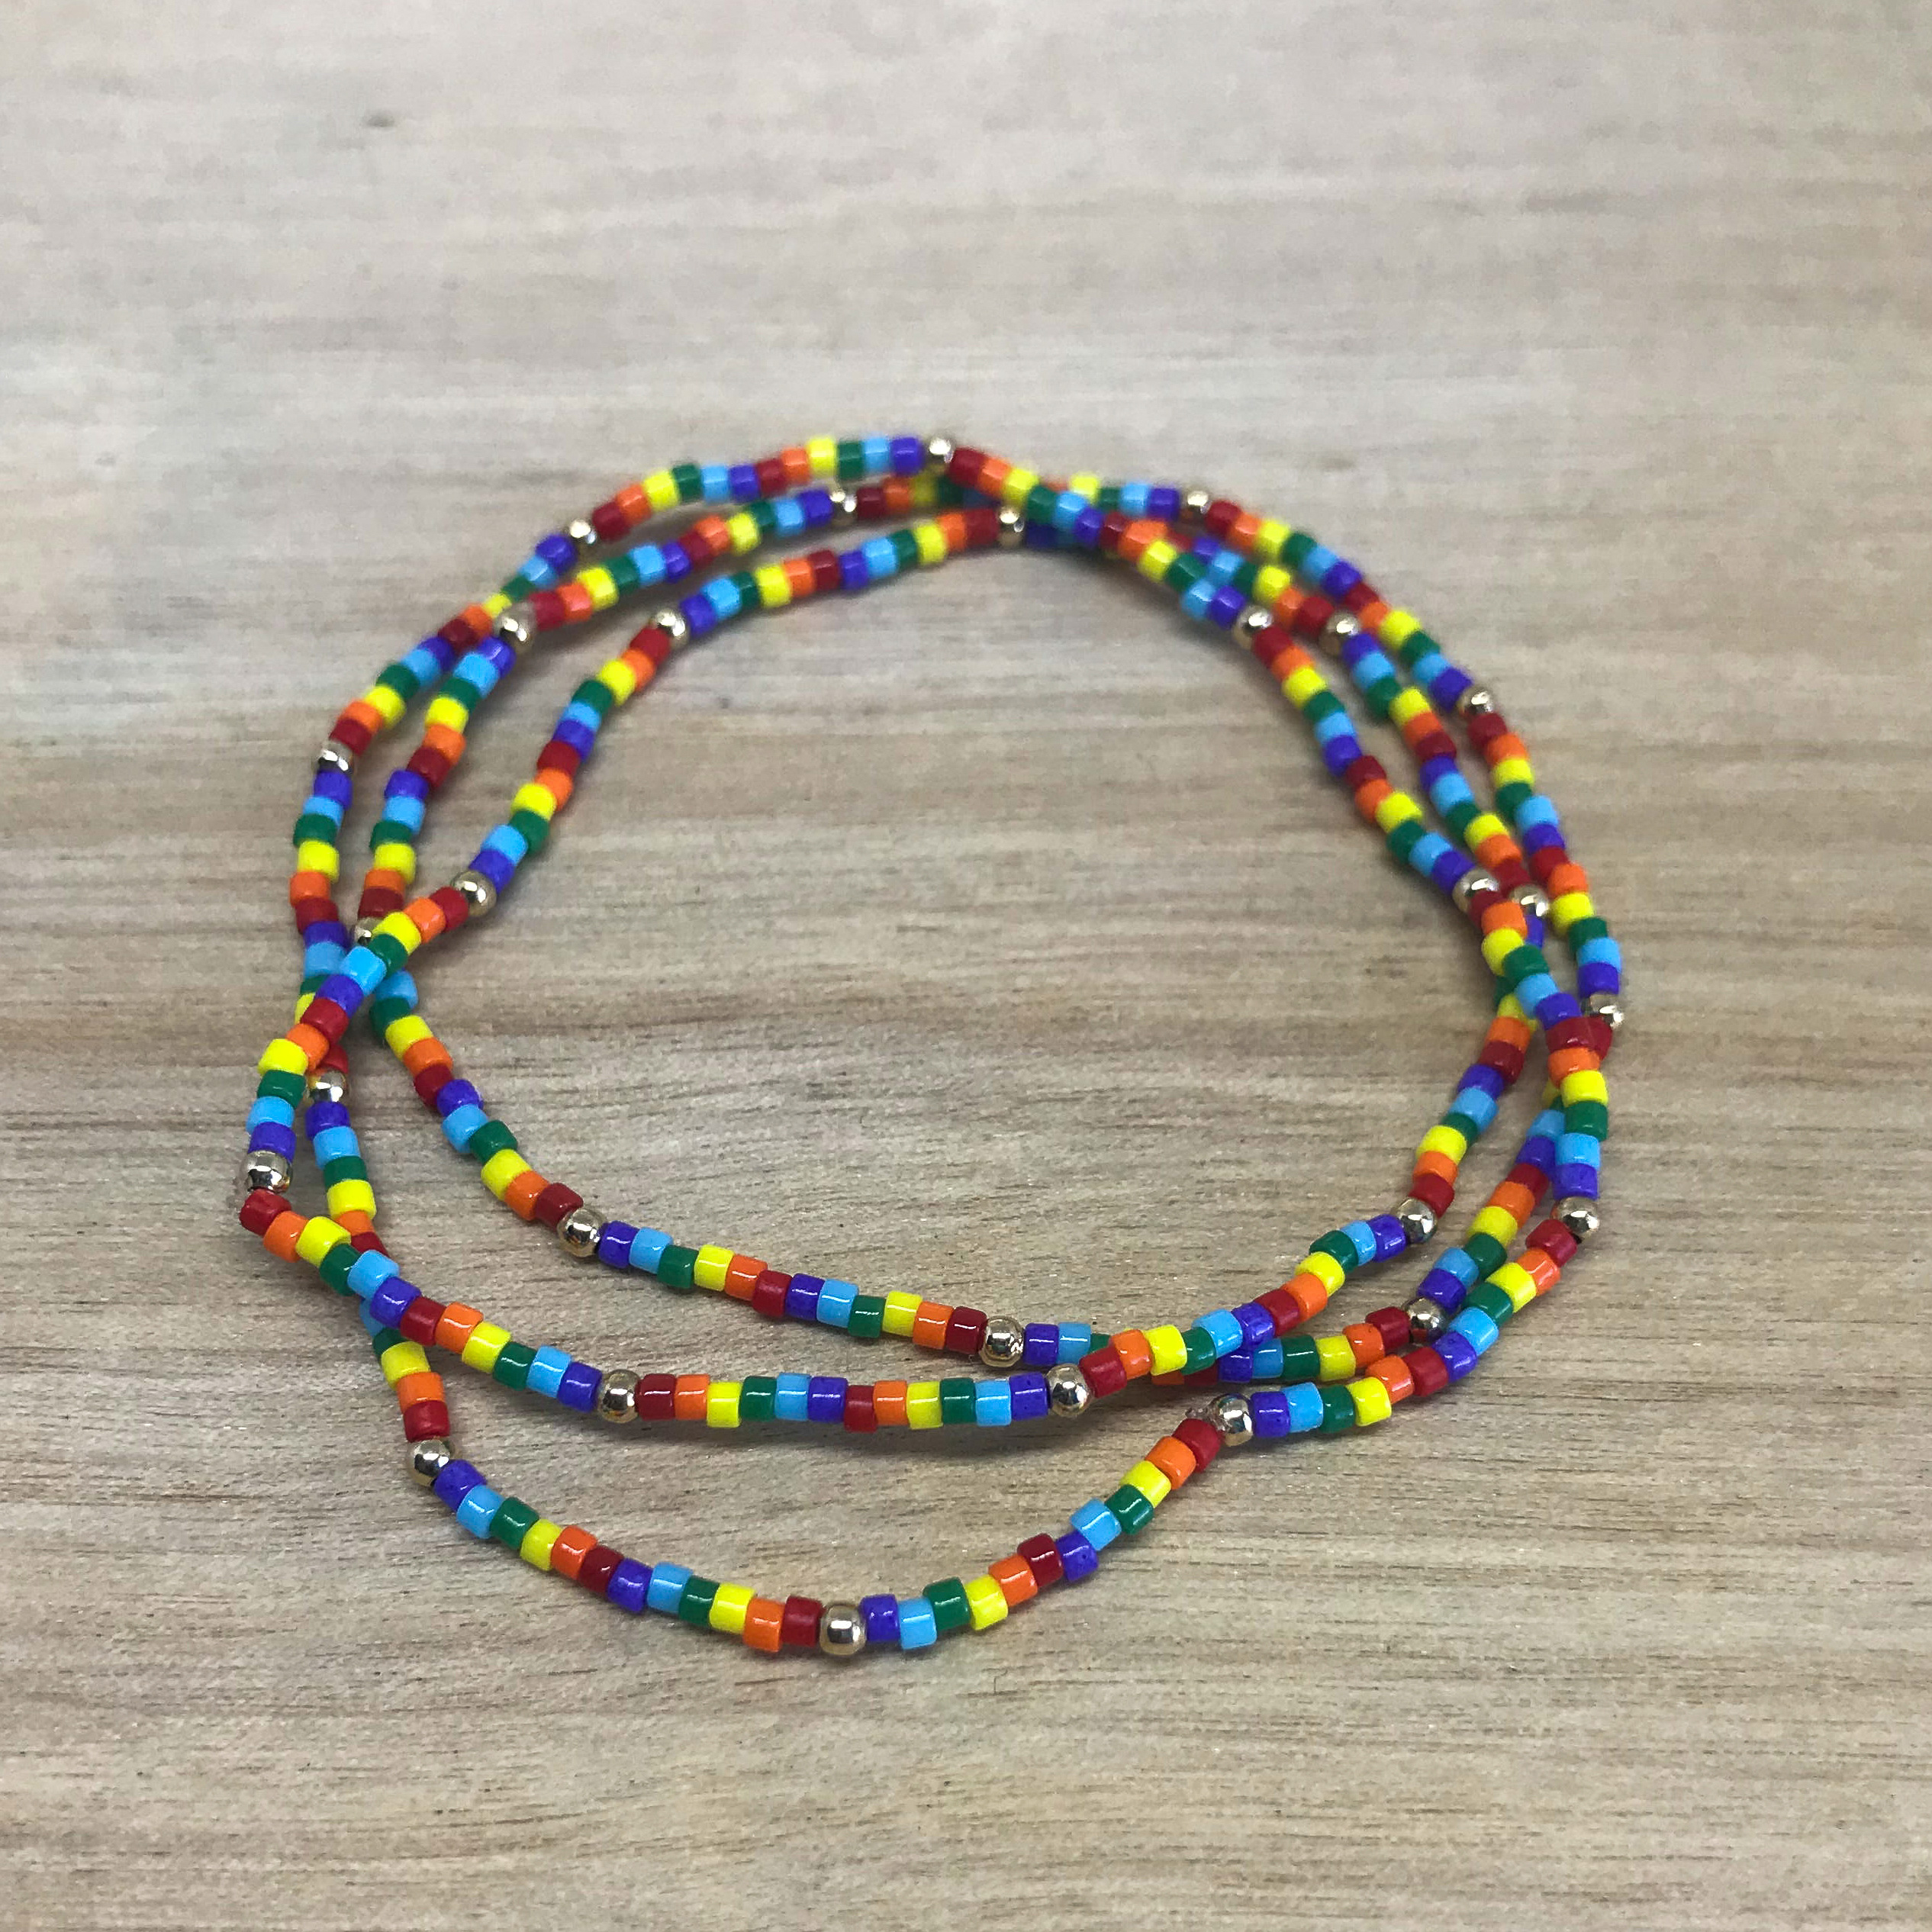 Rainbow Bracelet Seed Bead Jewelry. Japanese Delica Glass Beads